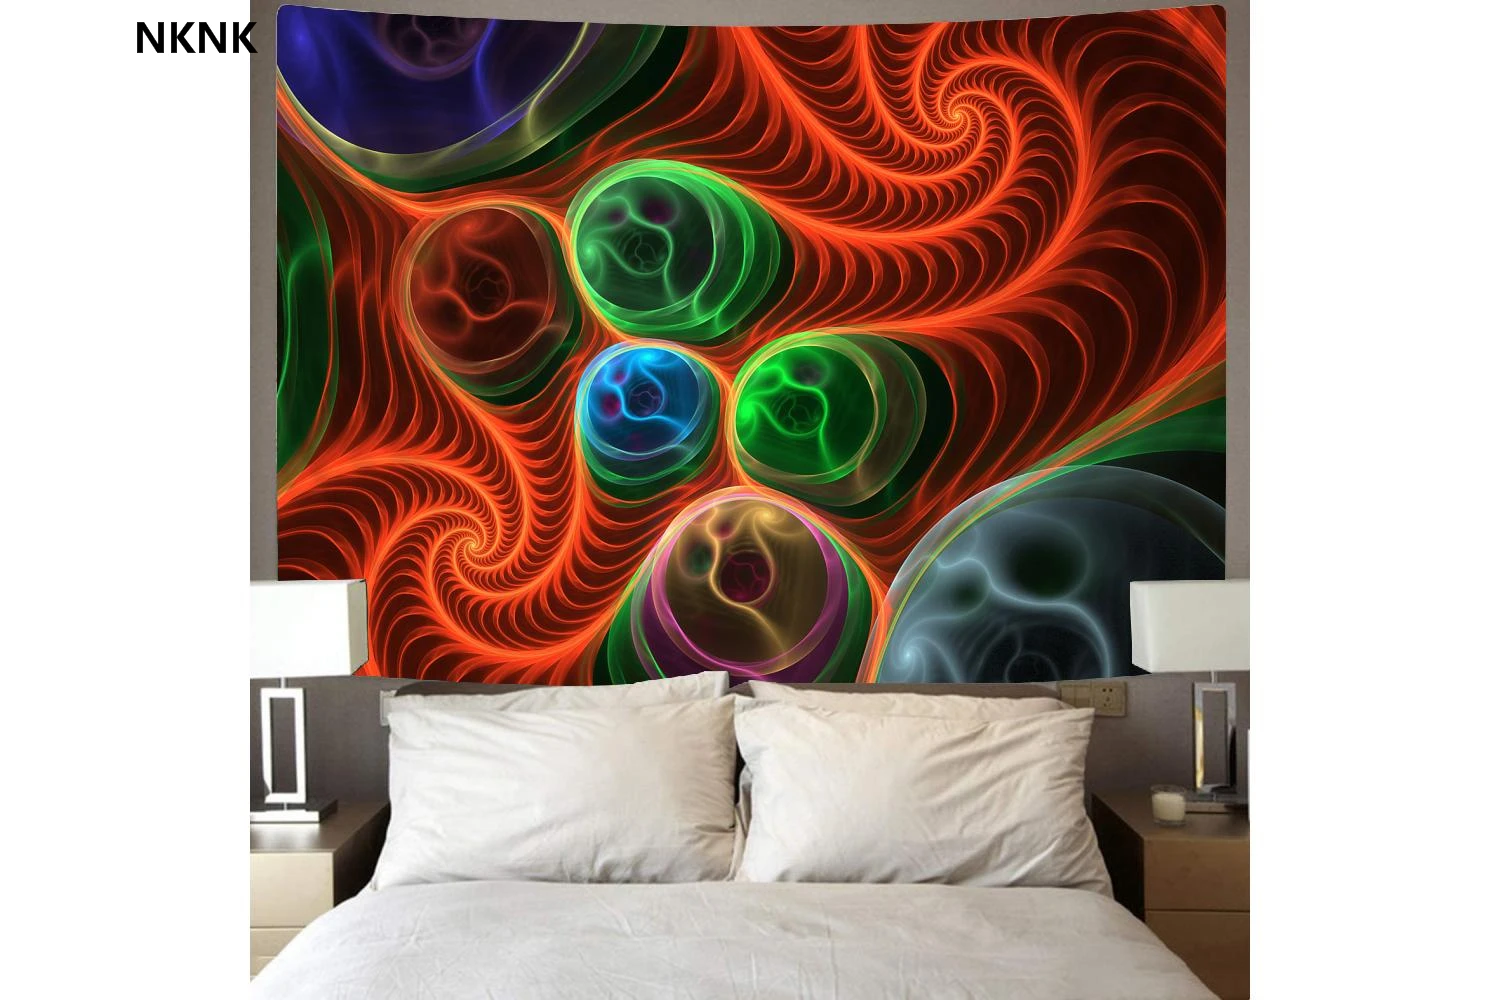 

NKNK Brand Geometric Tapiz Psychedelic Tapestries Vortex Wall Tapestry Ball Tenture Mandala Decor Boho decor Hippie New